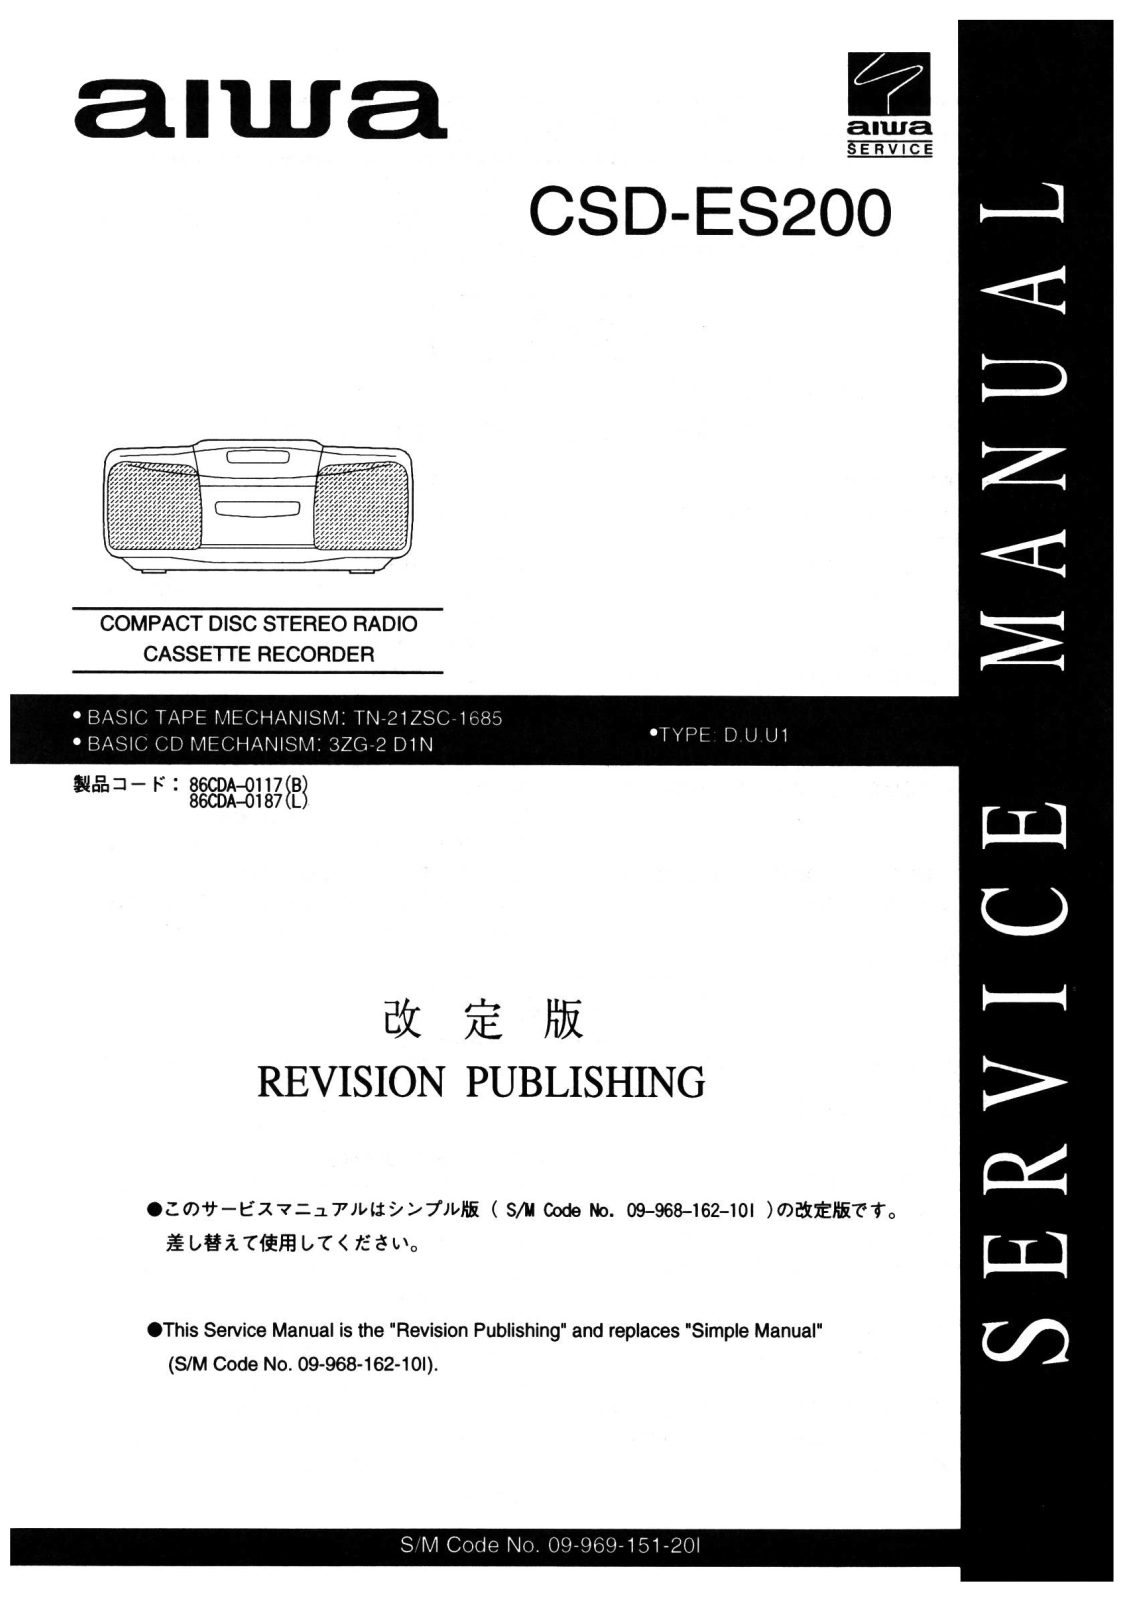 Aiwa csd es200 Service Manual